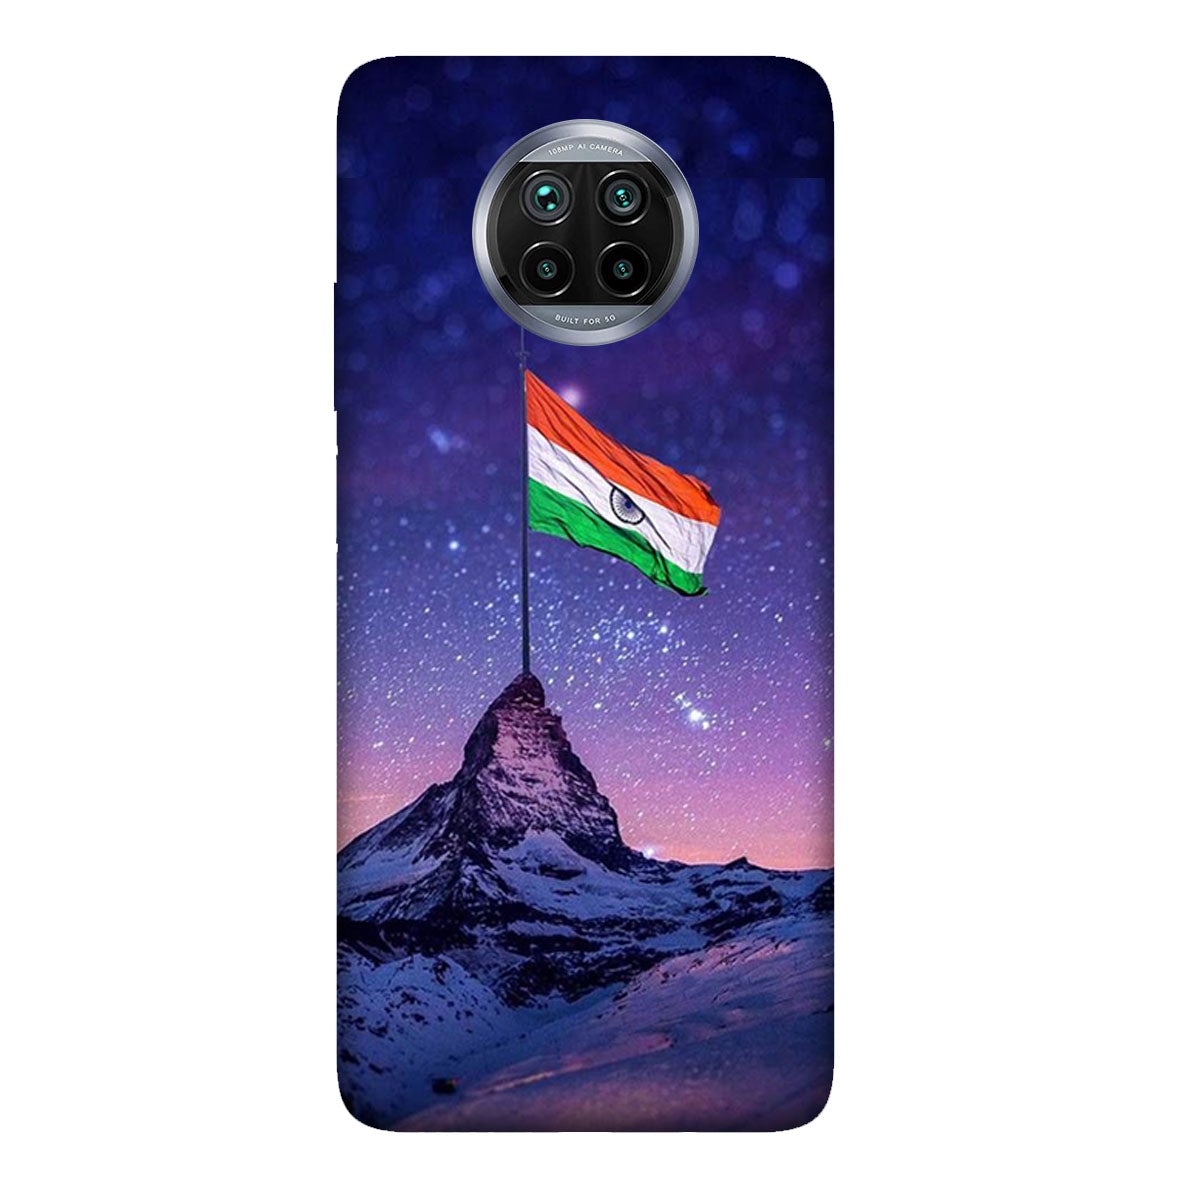 India Flag - Hoisted High - Mobile Phone Cover - Hard Case